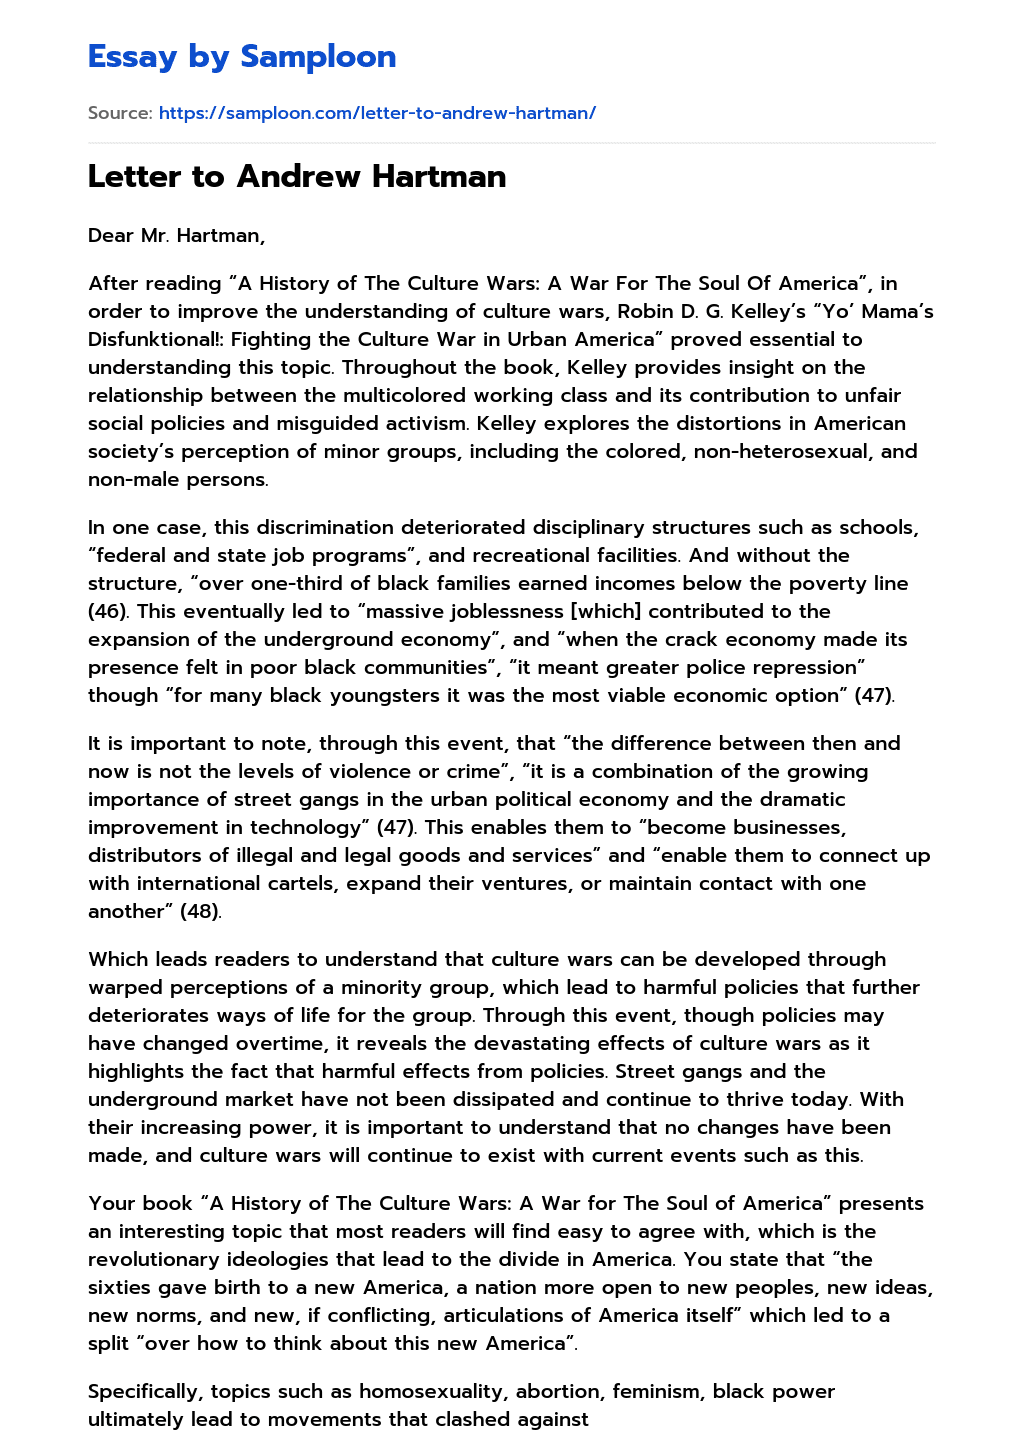 Letter to Andrew Hartman essay